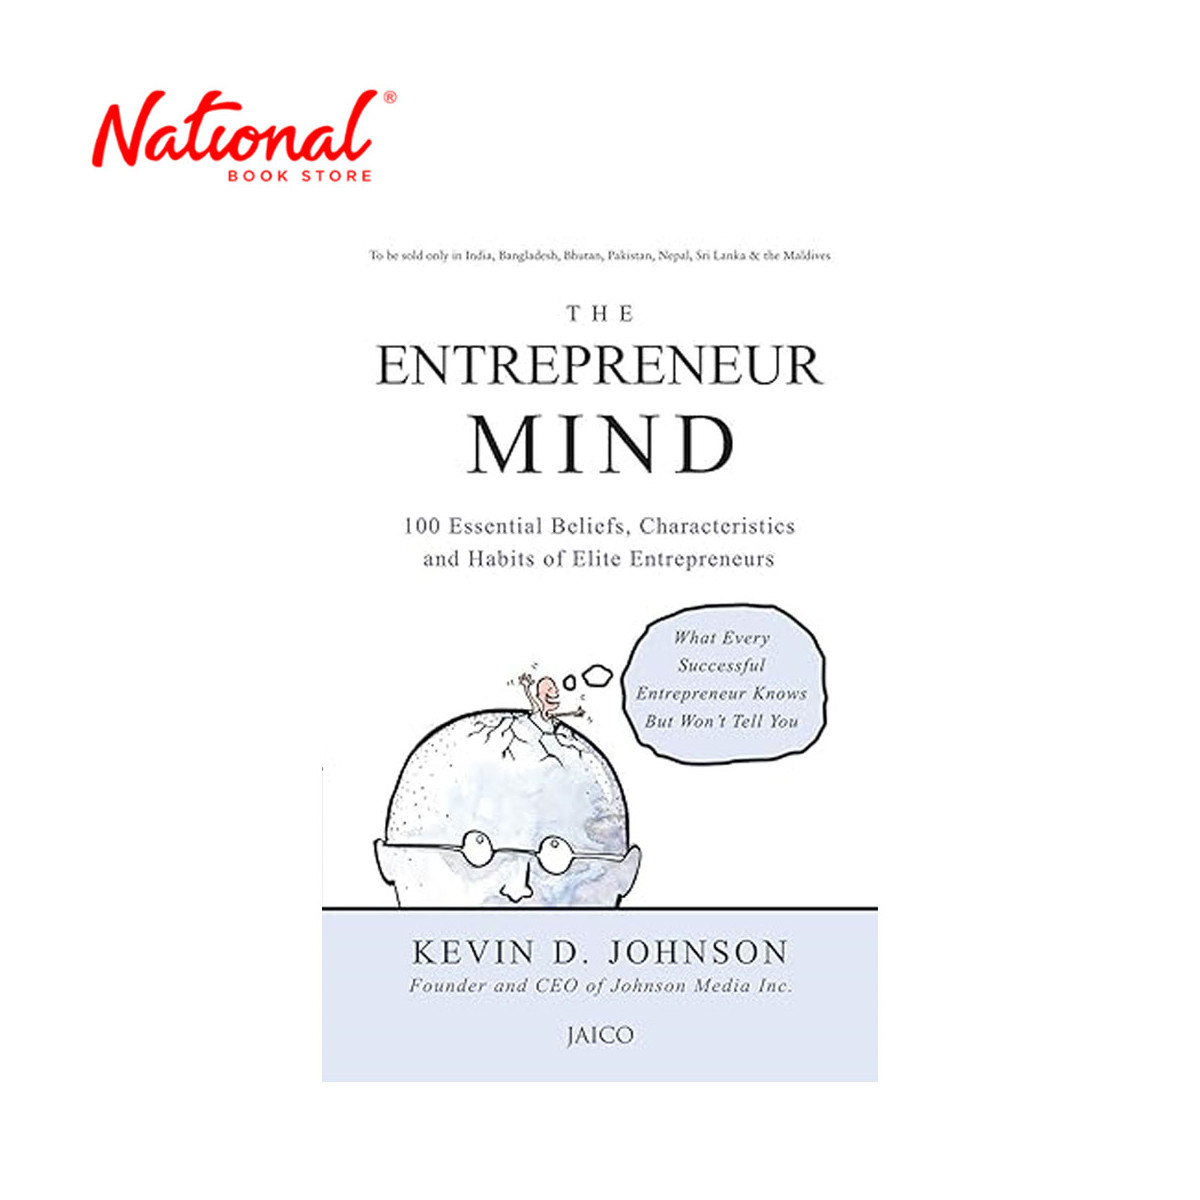 Entrepreneur Mind by Kevin D. Johnson - Trade Paperback - Business & Investing